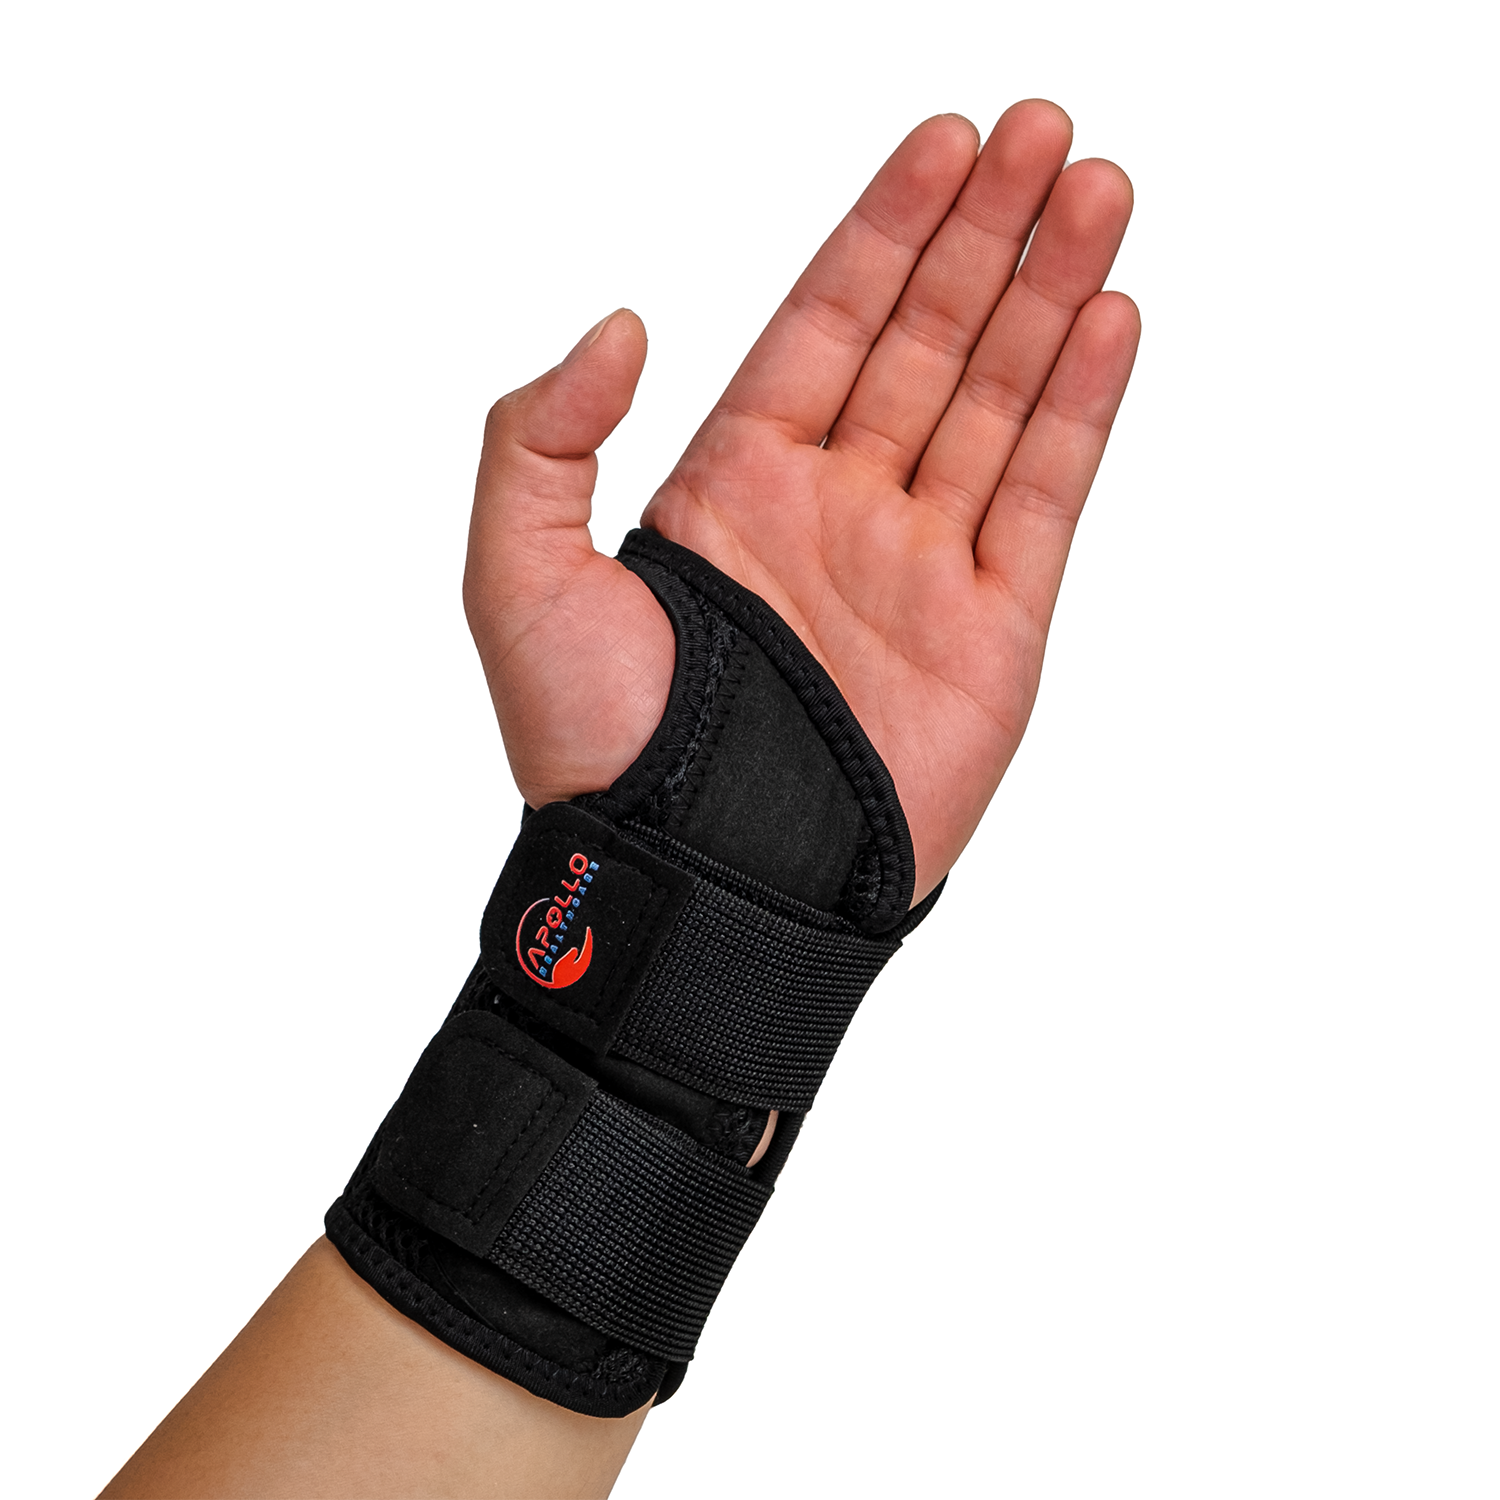 Apollo Standard Wrist Support Brace - Black